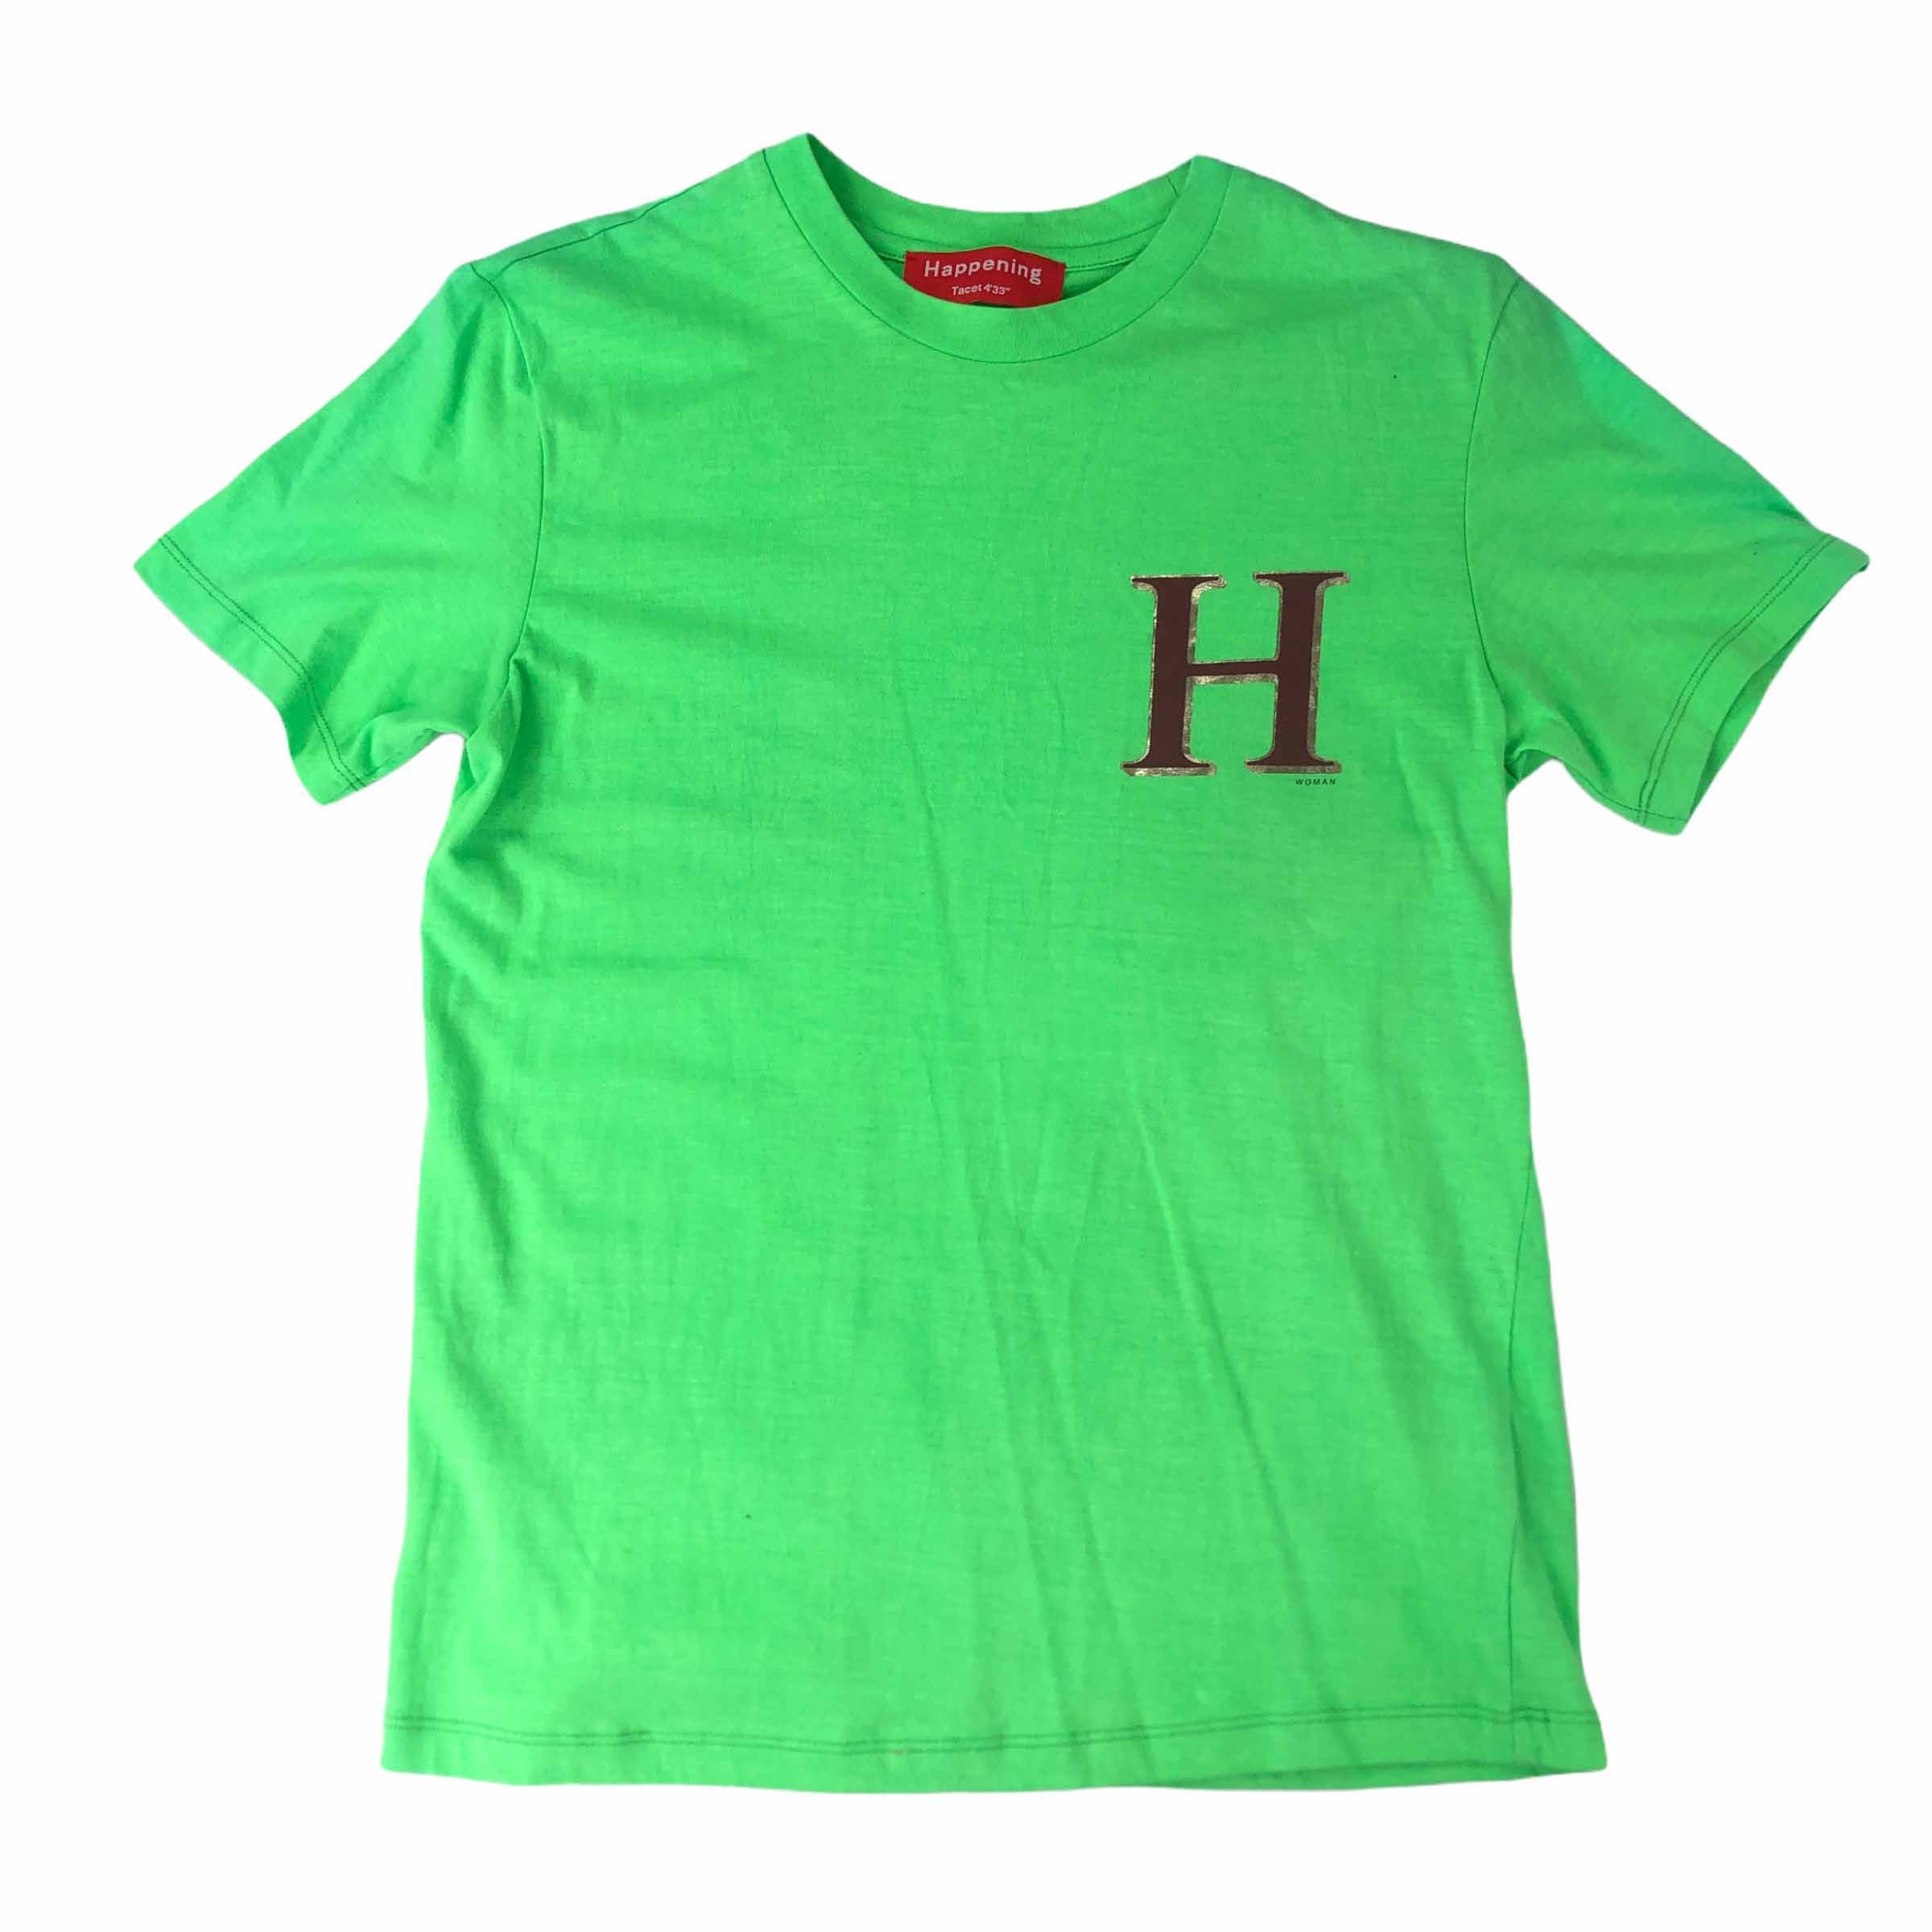 [Happening] H Logo Short Sleeve NEON - Size Free